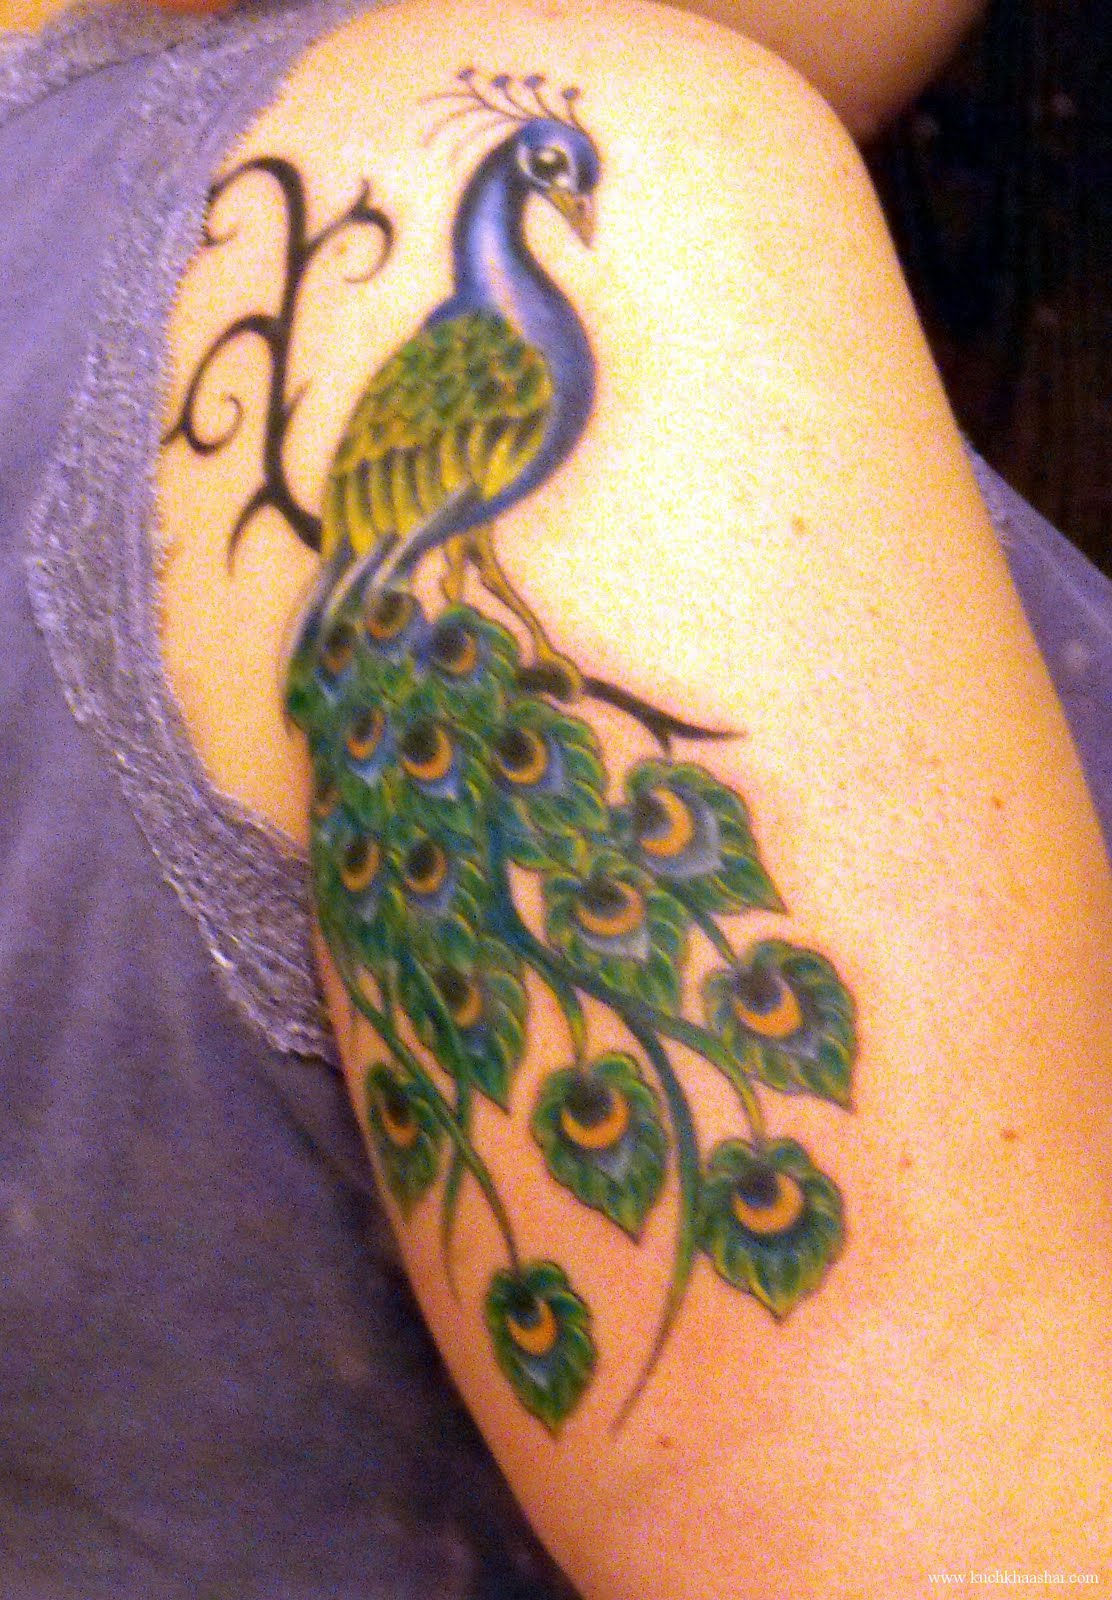 Peacock Tattoo Design on Arm for Women - | TattooMagz › Tattoo Designs